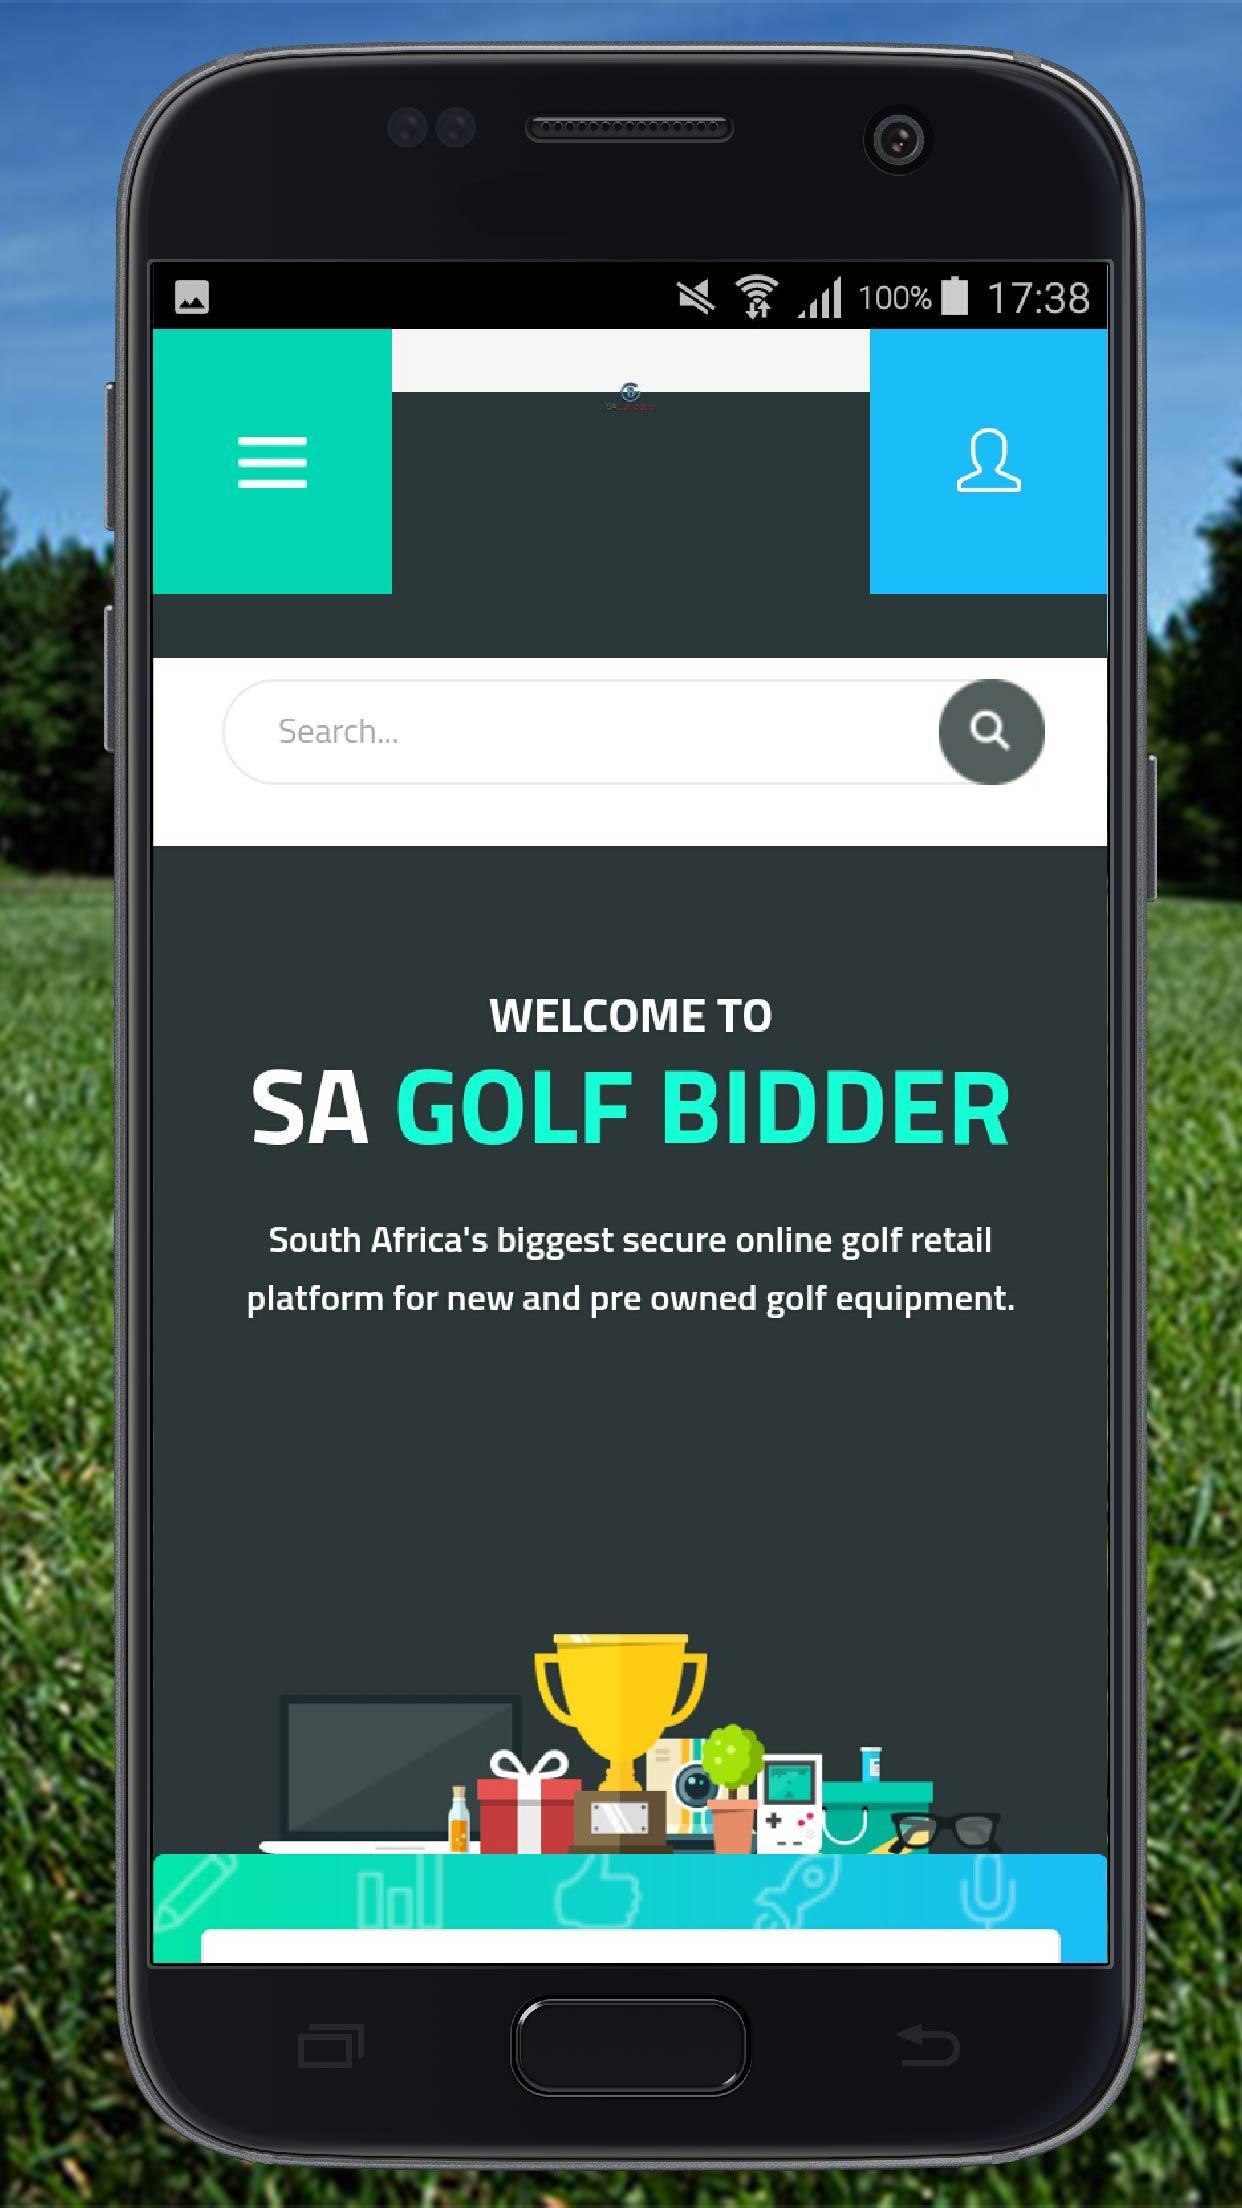 SA Golf Bidder for Android - APK Download